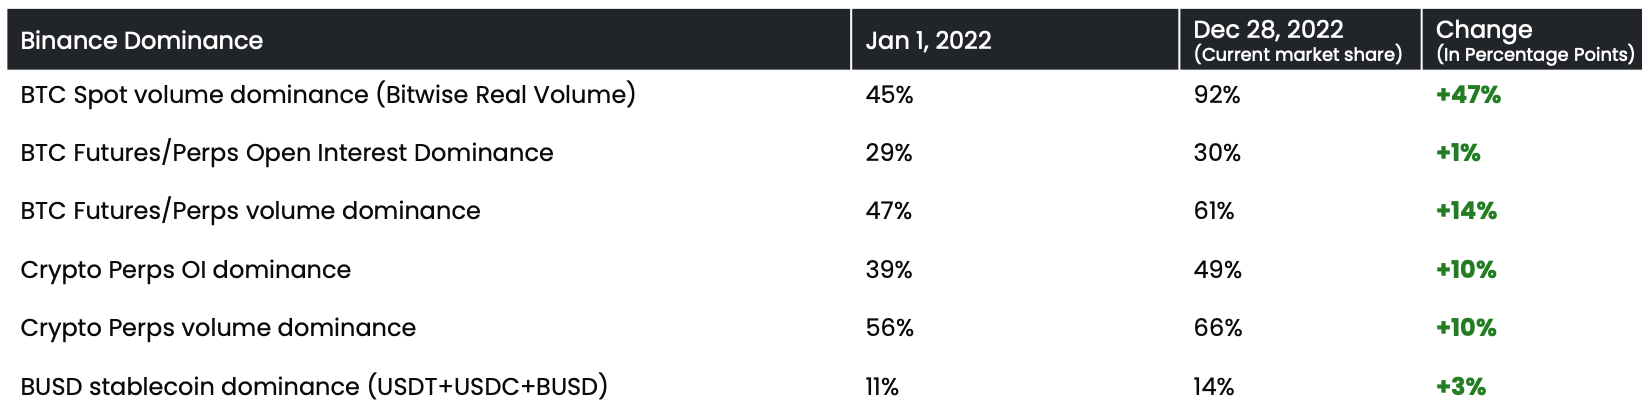 Binance Growth in 2022